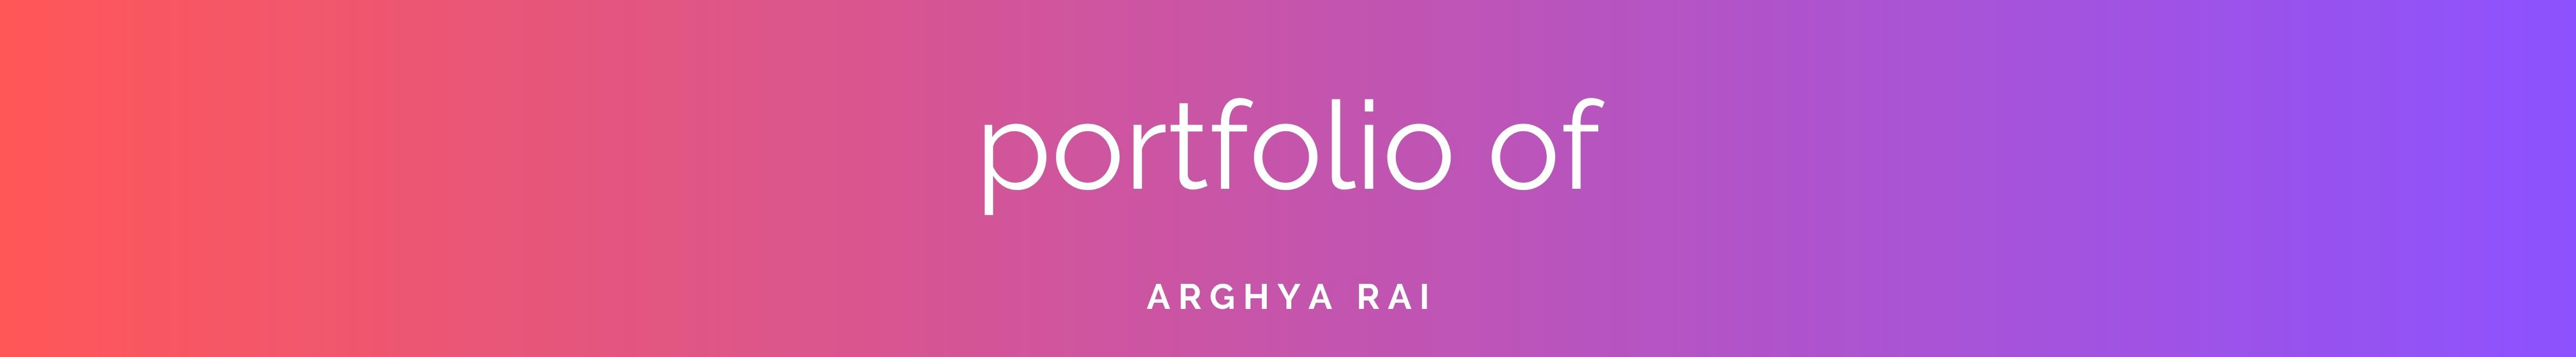 Arghya Rai's profile banner